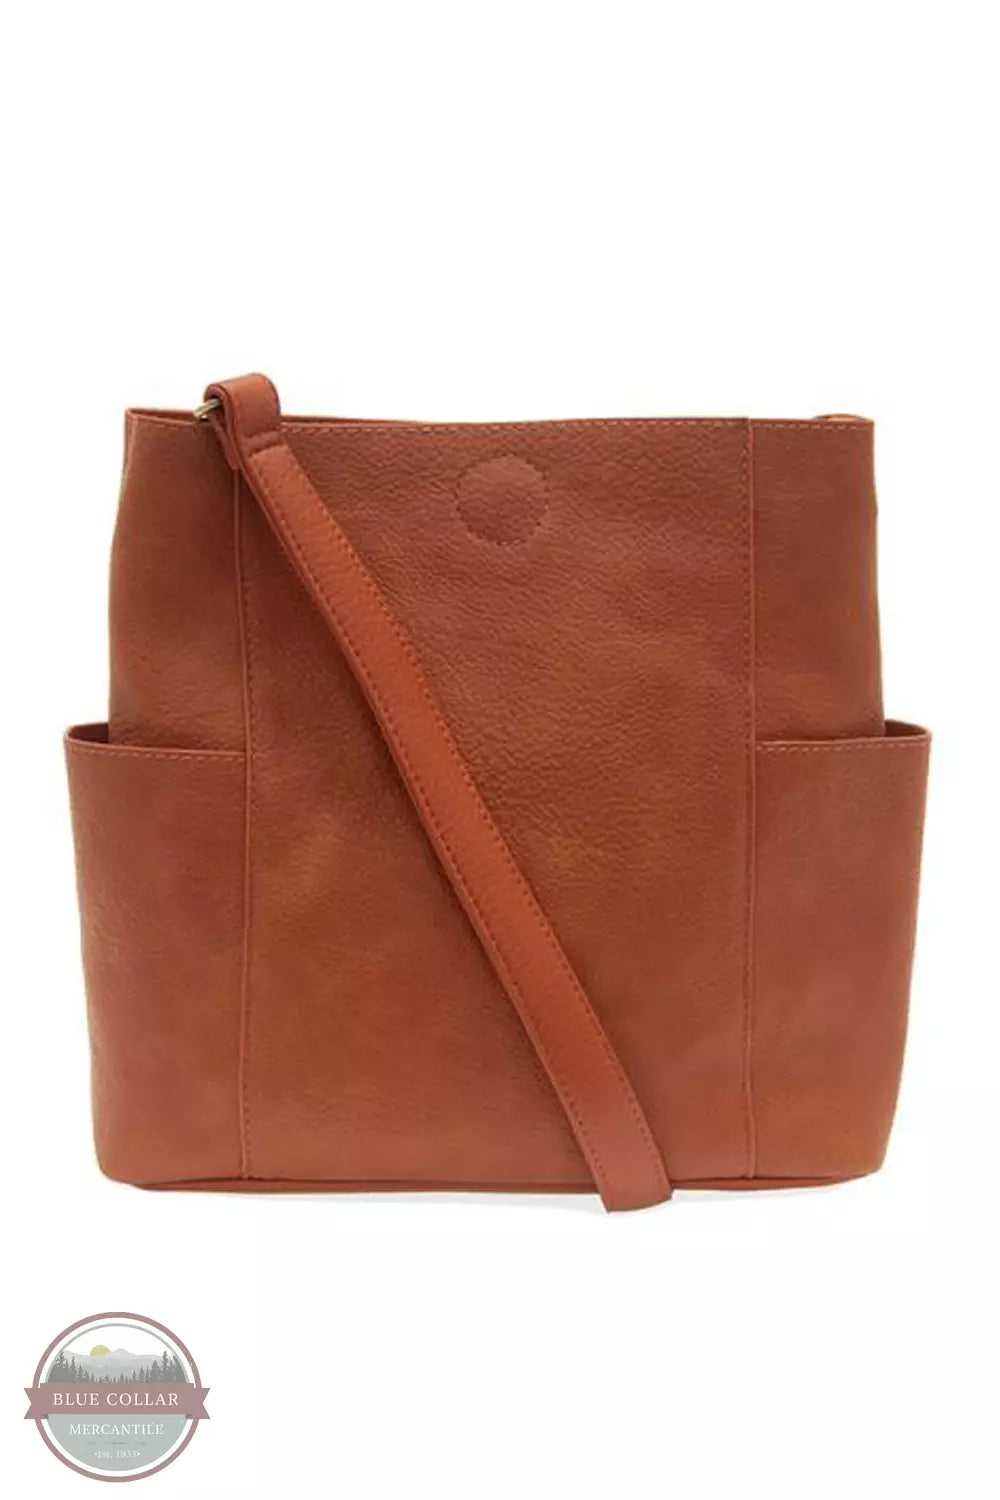 Joy Susan L8089 Kayleigh Side Pocket Bucket Bag with Crossbody Bag Burnt Orange Front View